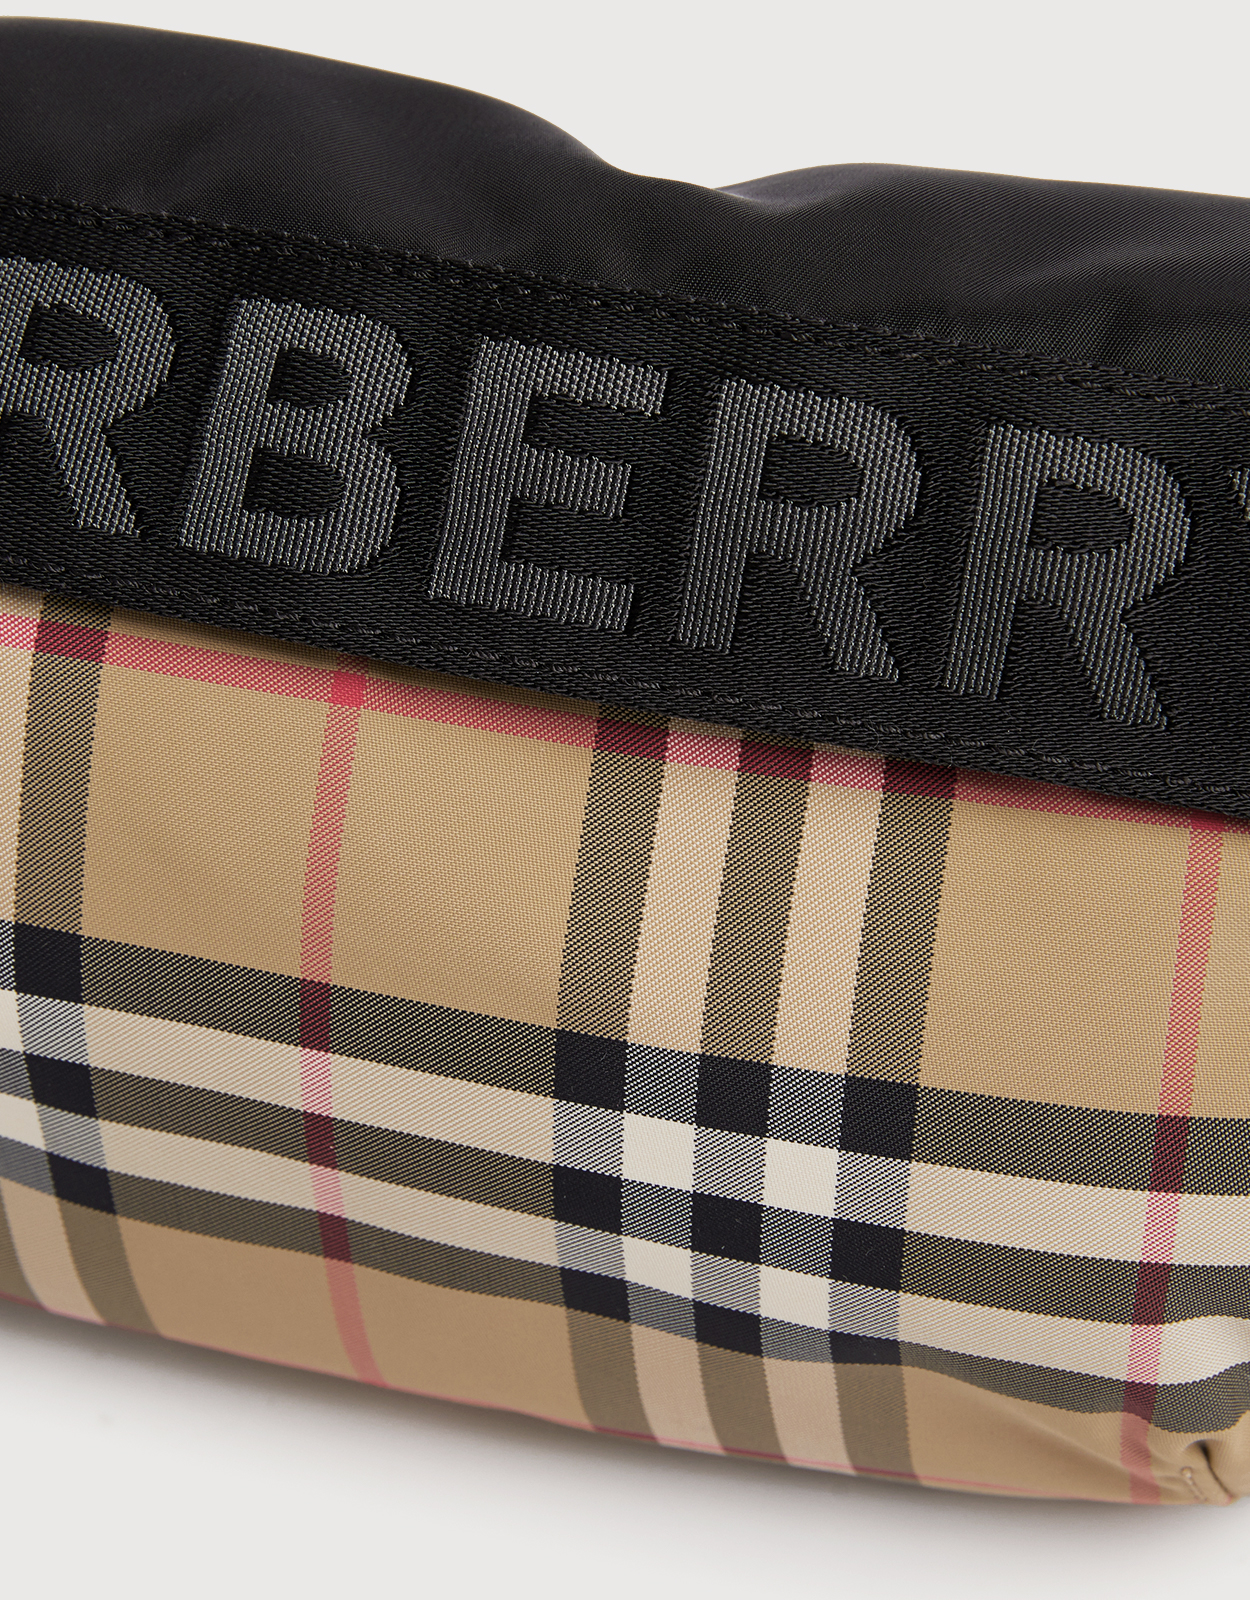 Burberry Men's Vintage Check Nylon Belt Bag/Fanny Pack - Bergdorf